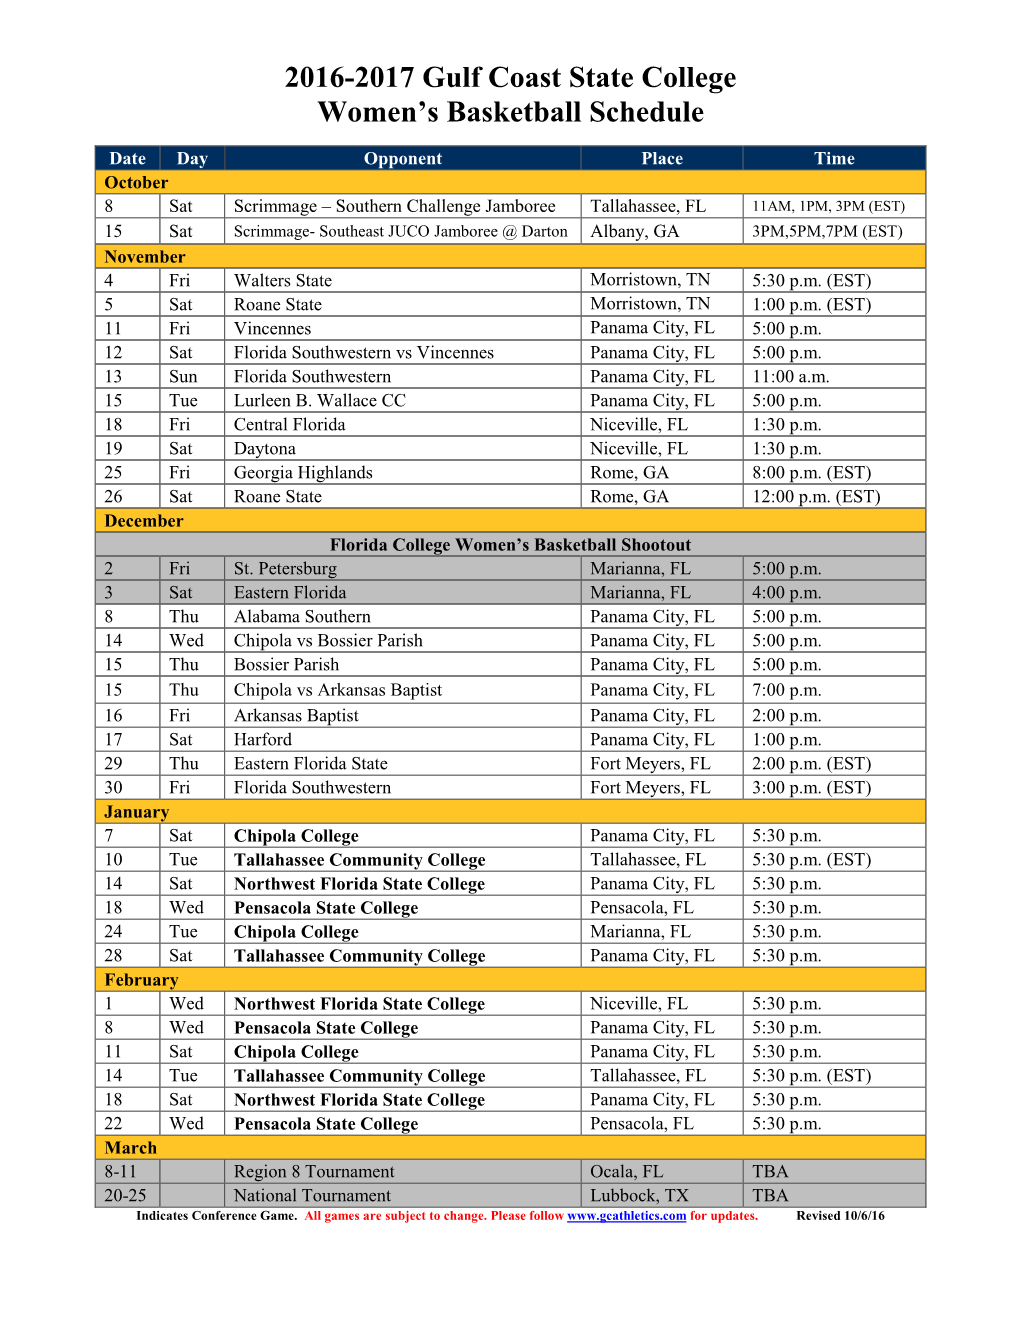 2016-2017 Gulf Coast State College Women's Basketball Schedule